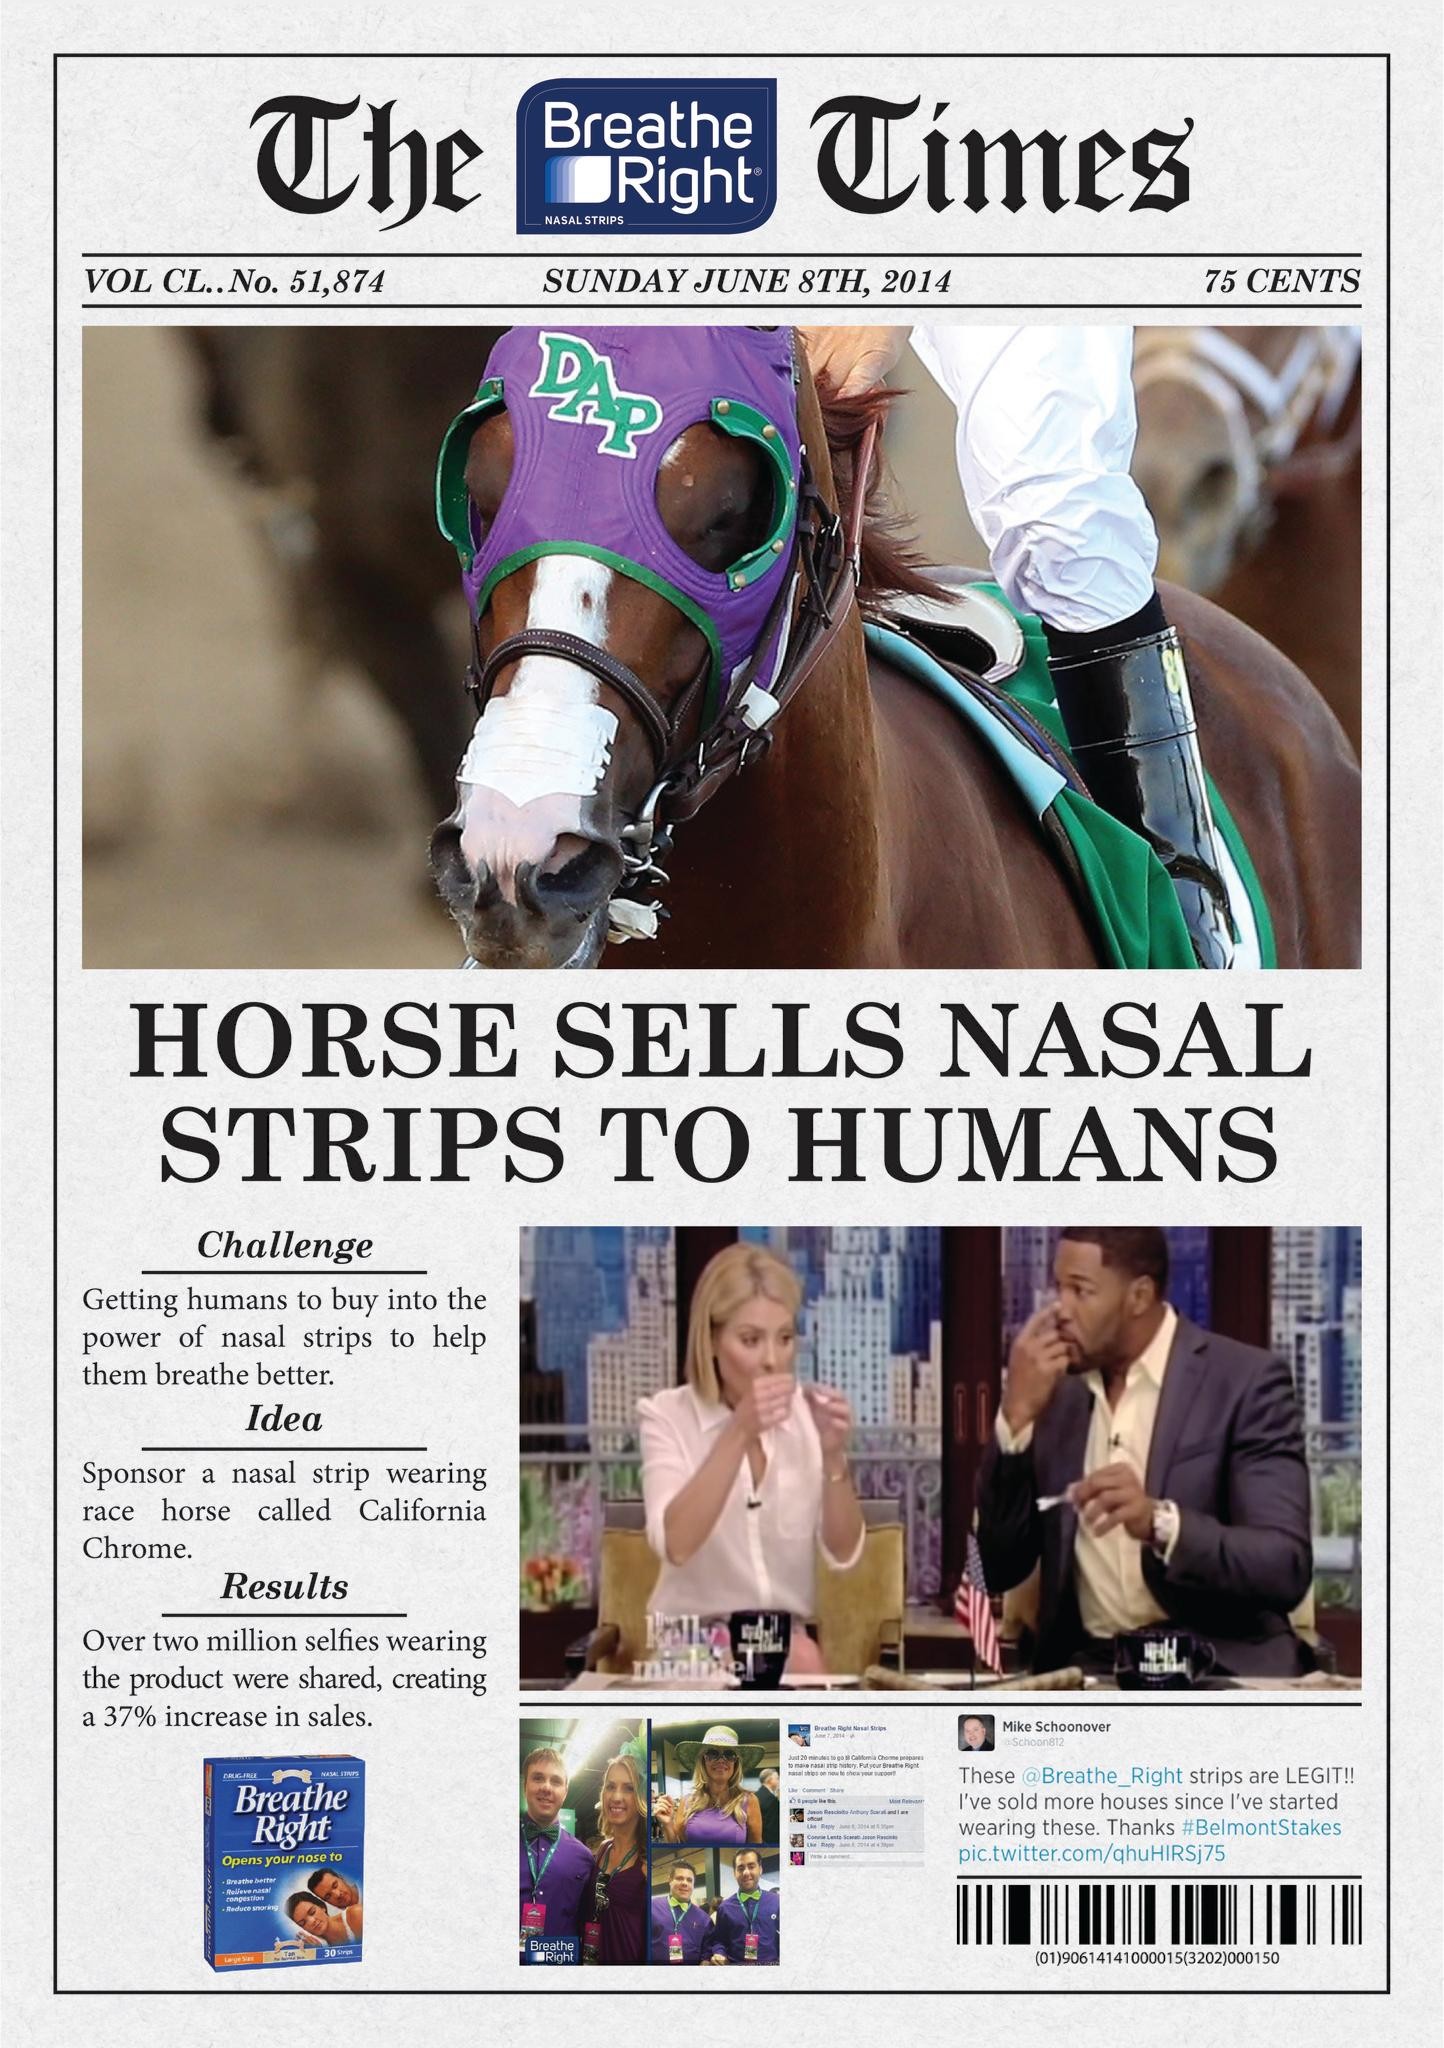 HORSE SELLS NASAL STRIP TO HUMANS